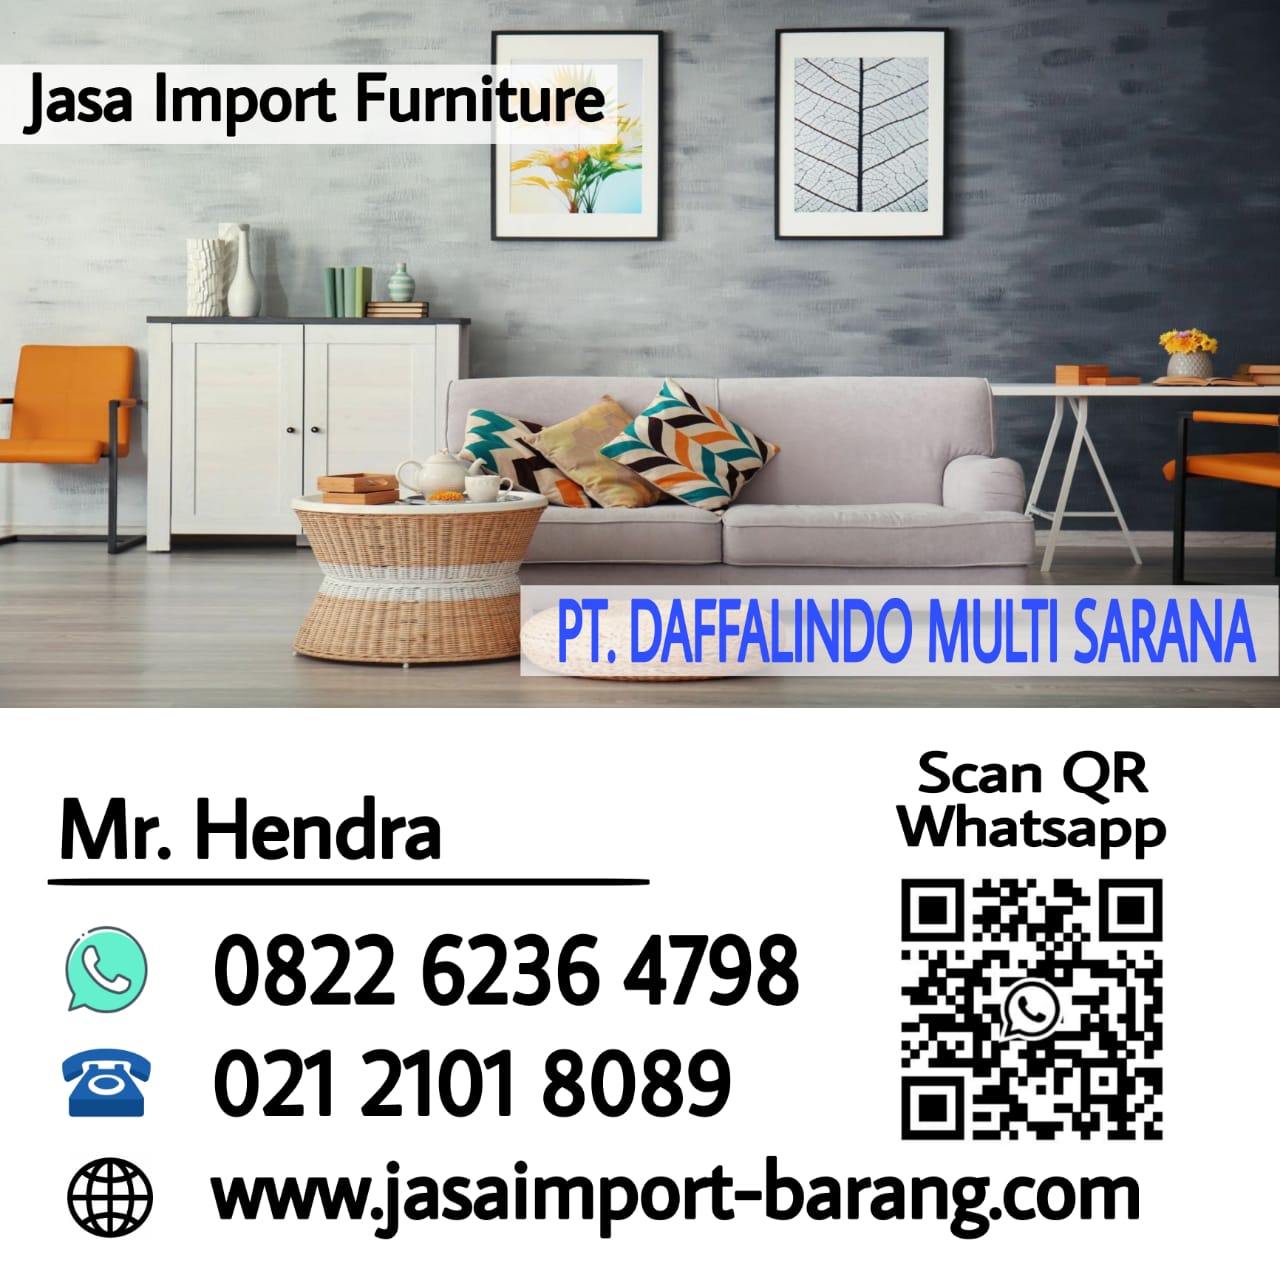 Jasa-Import-furniture.jpg